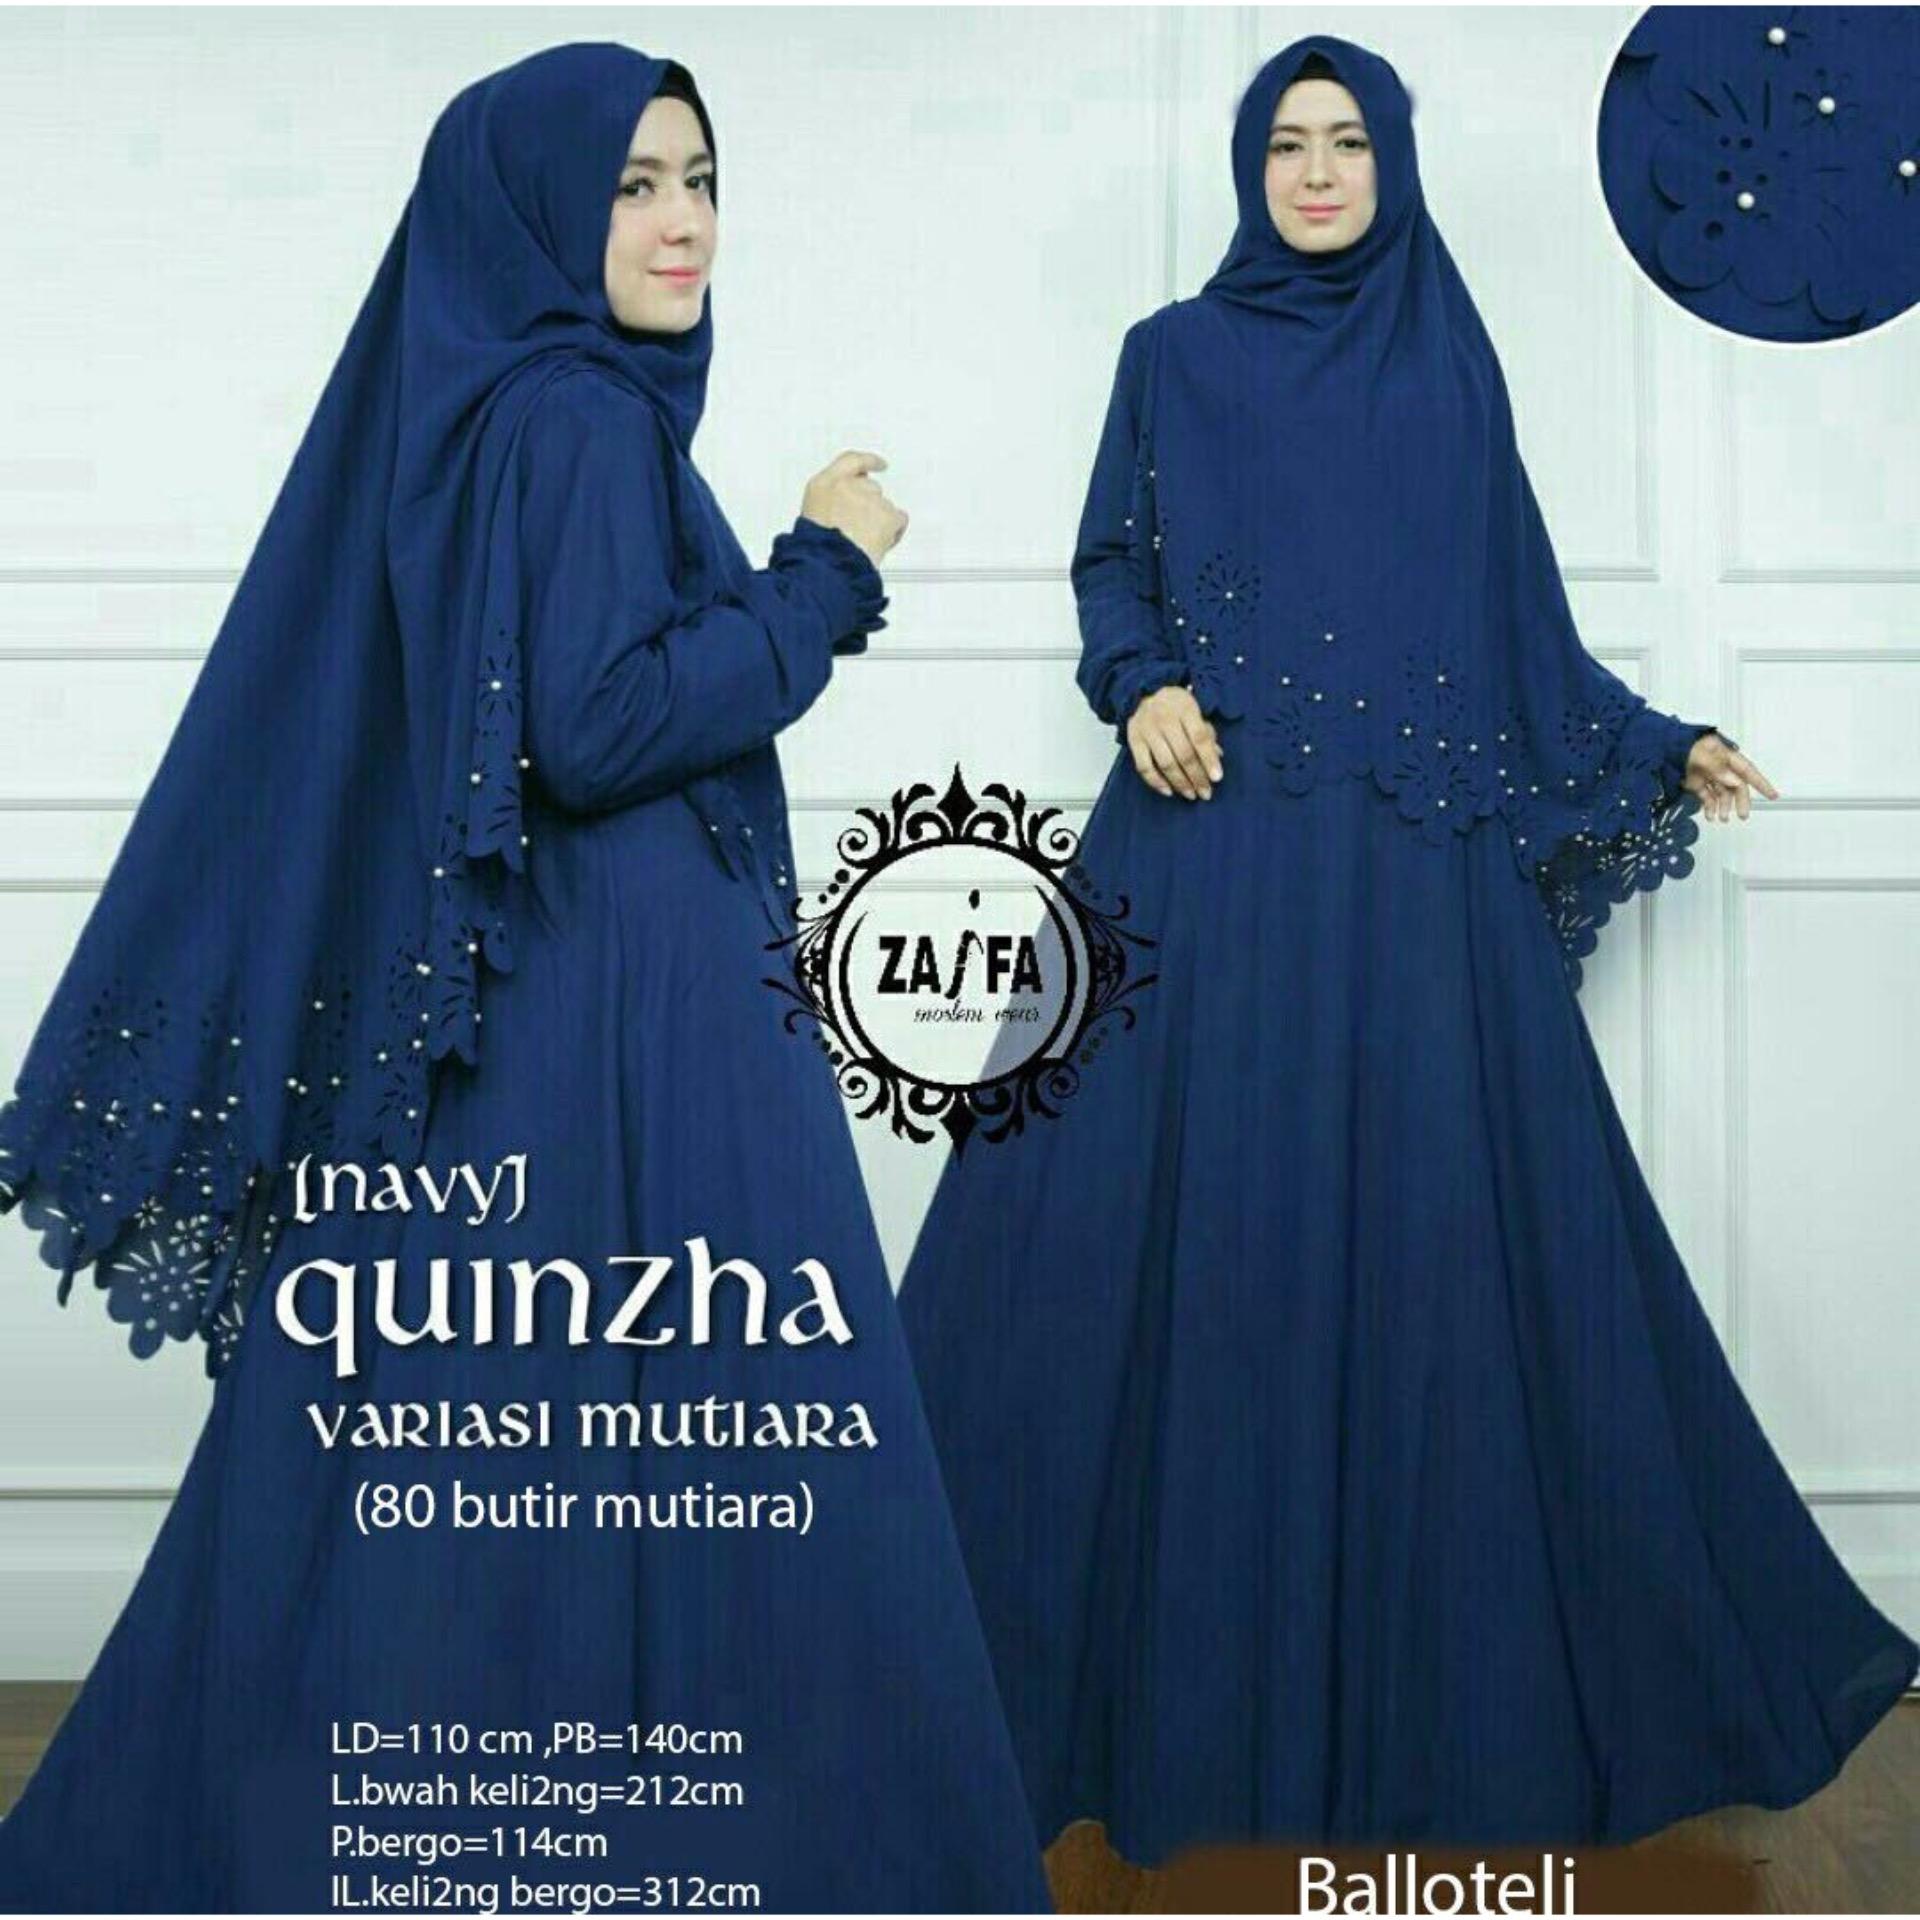 Shoppaholic Shop Maxi Dress Gamis Hijab Quinzha Mutiara - Navy / Dress Muslimah / Hijab Muslim / Gamis Syari / Baju Muslim / Fashion Muslim / Dress Muslim / Fashion Maxi / Setelan Muslim / Atasan Muslimah /Gamis Balloteli / Bergo